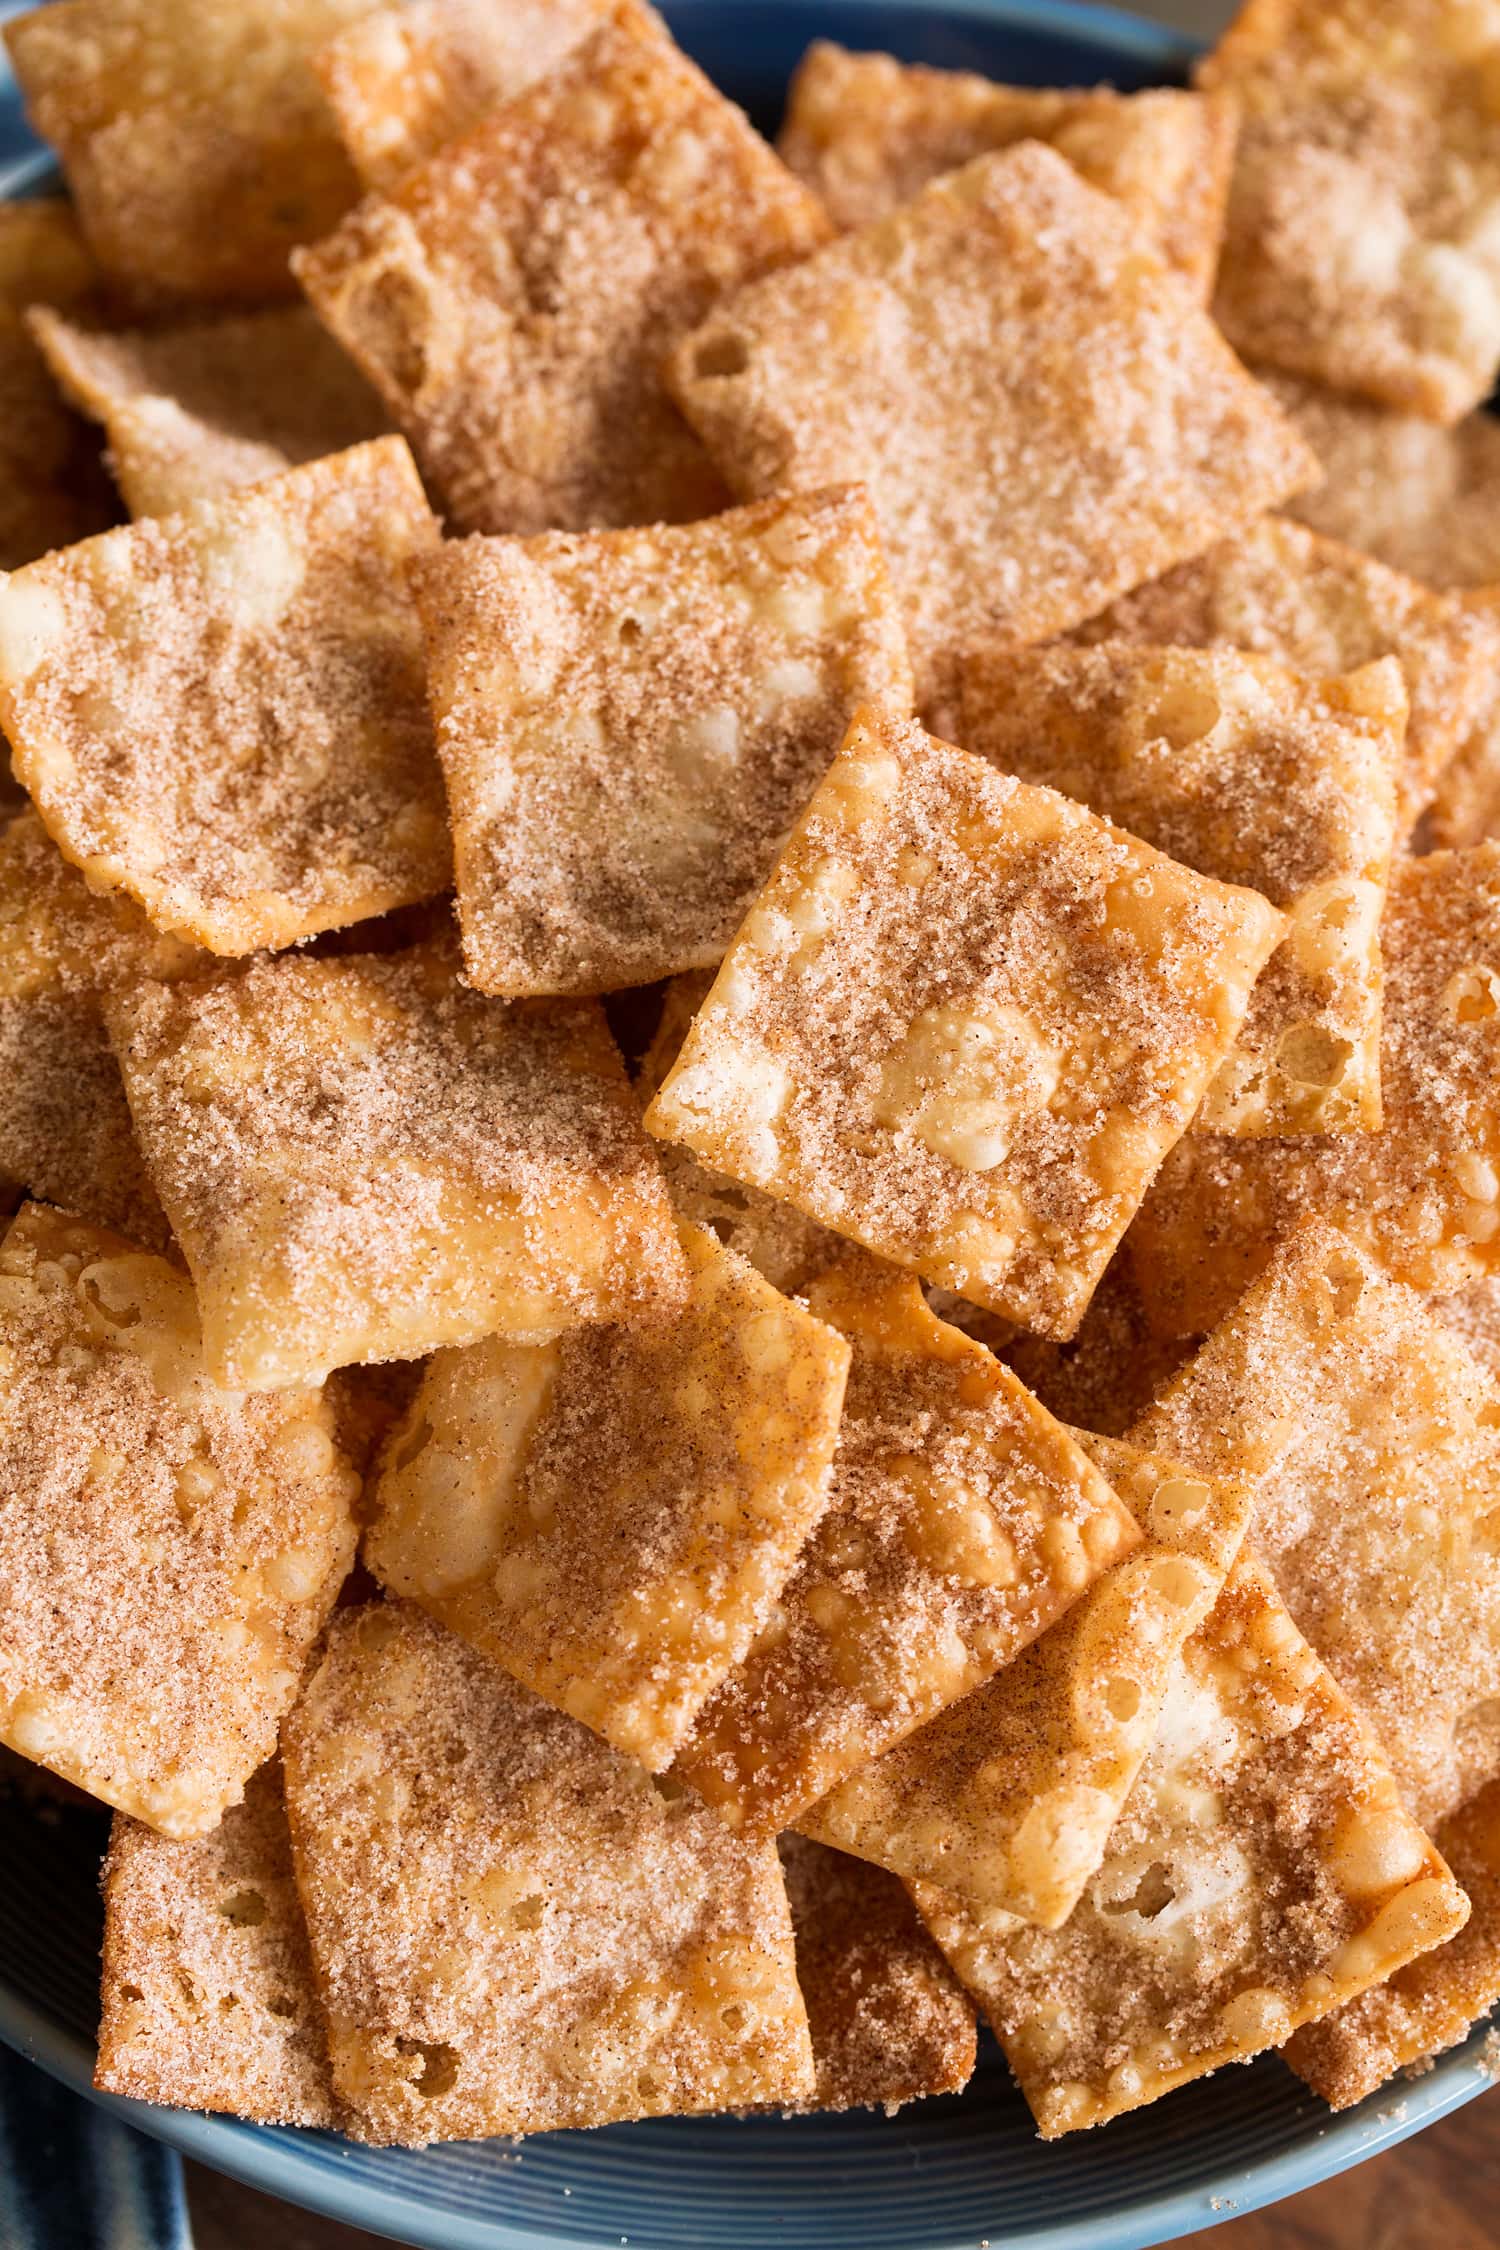 Cinnamon sugar covered wonton chips shown close up.